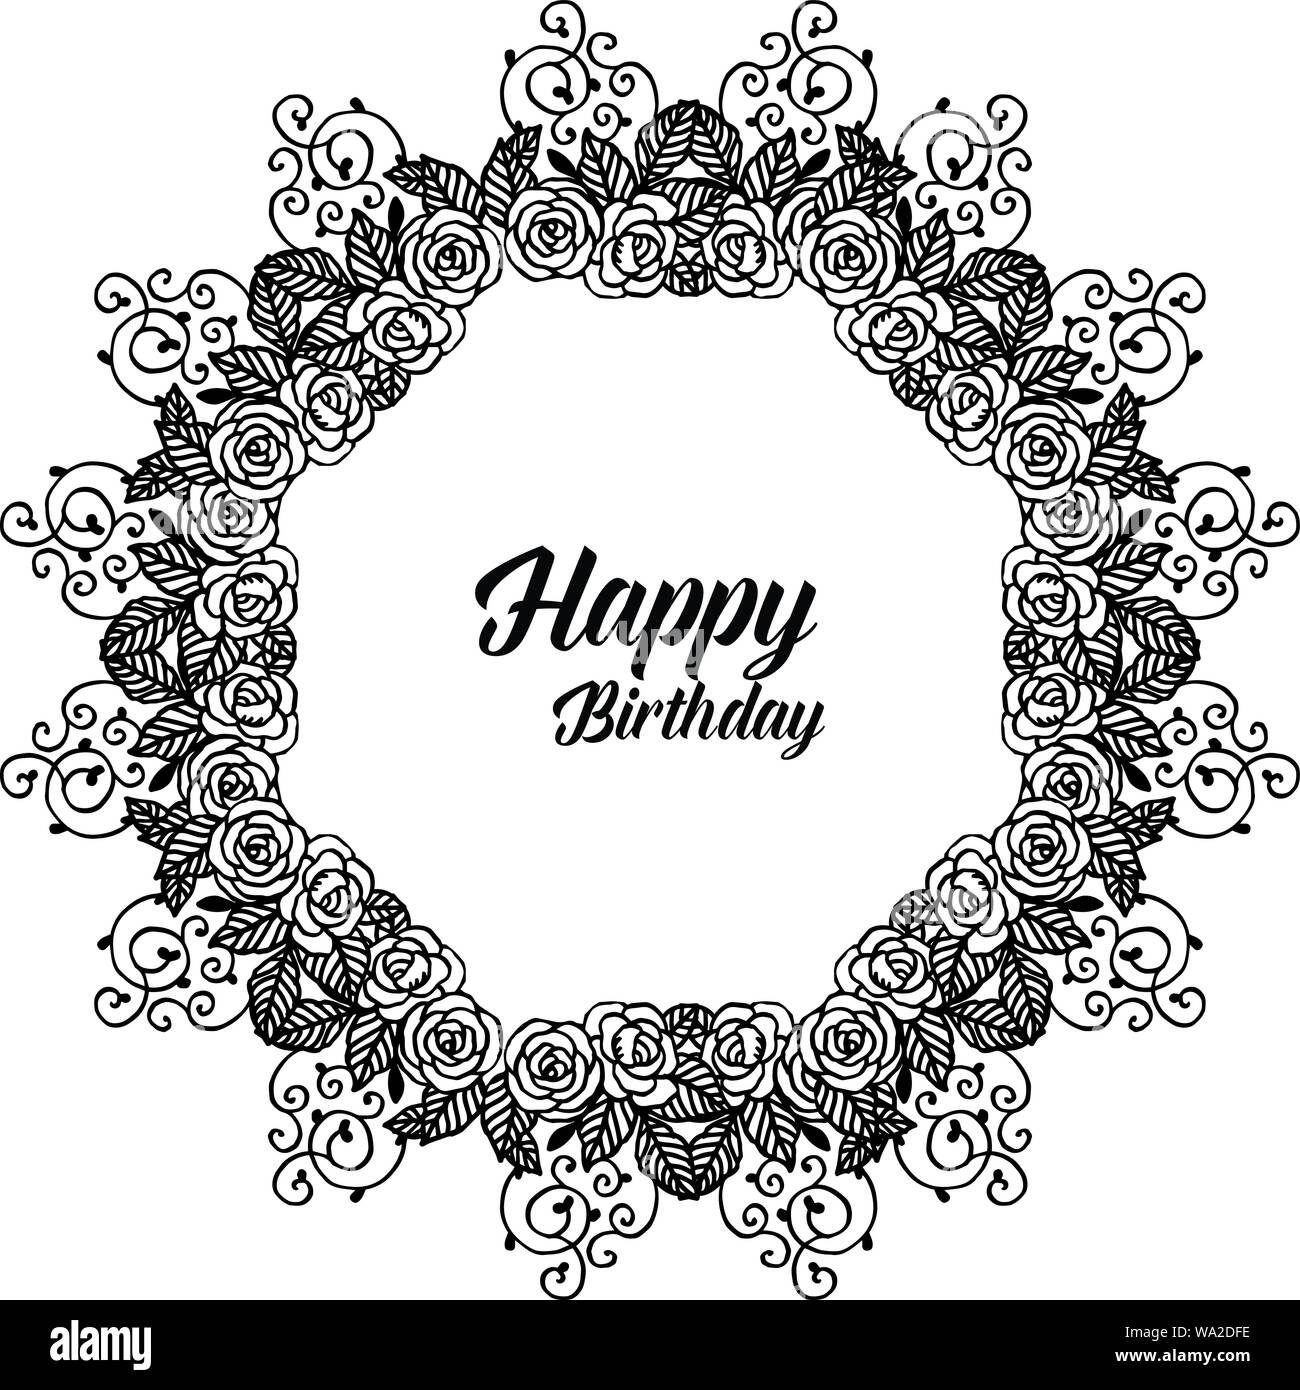 Template greeting card happy birthday, design ornament flower frame ...